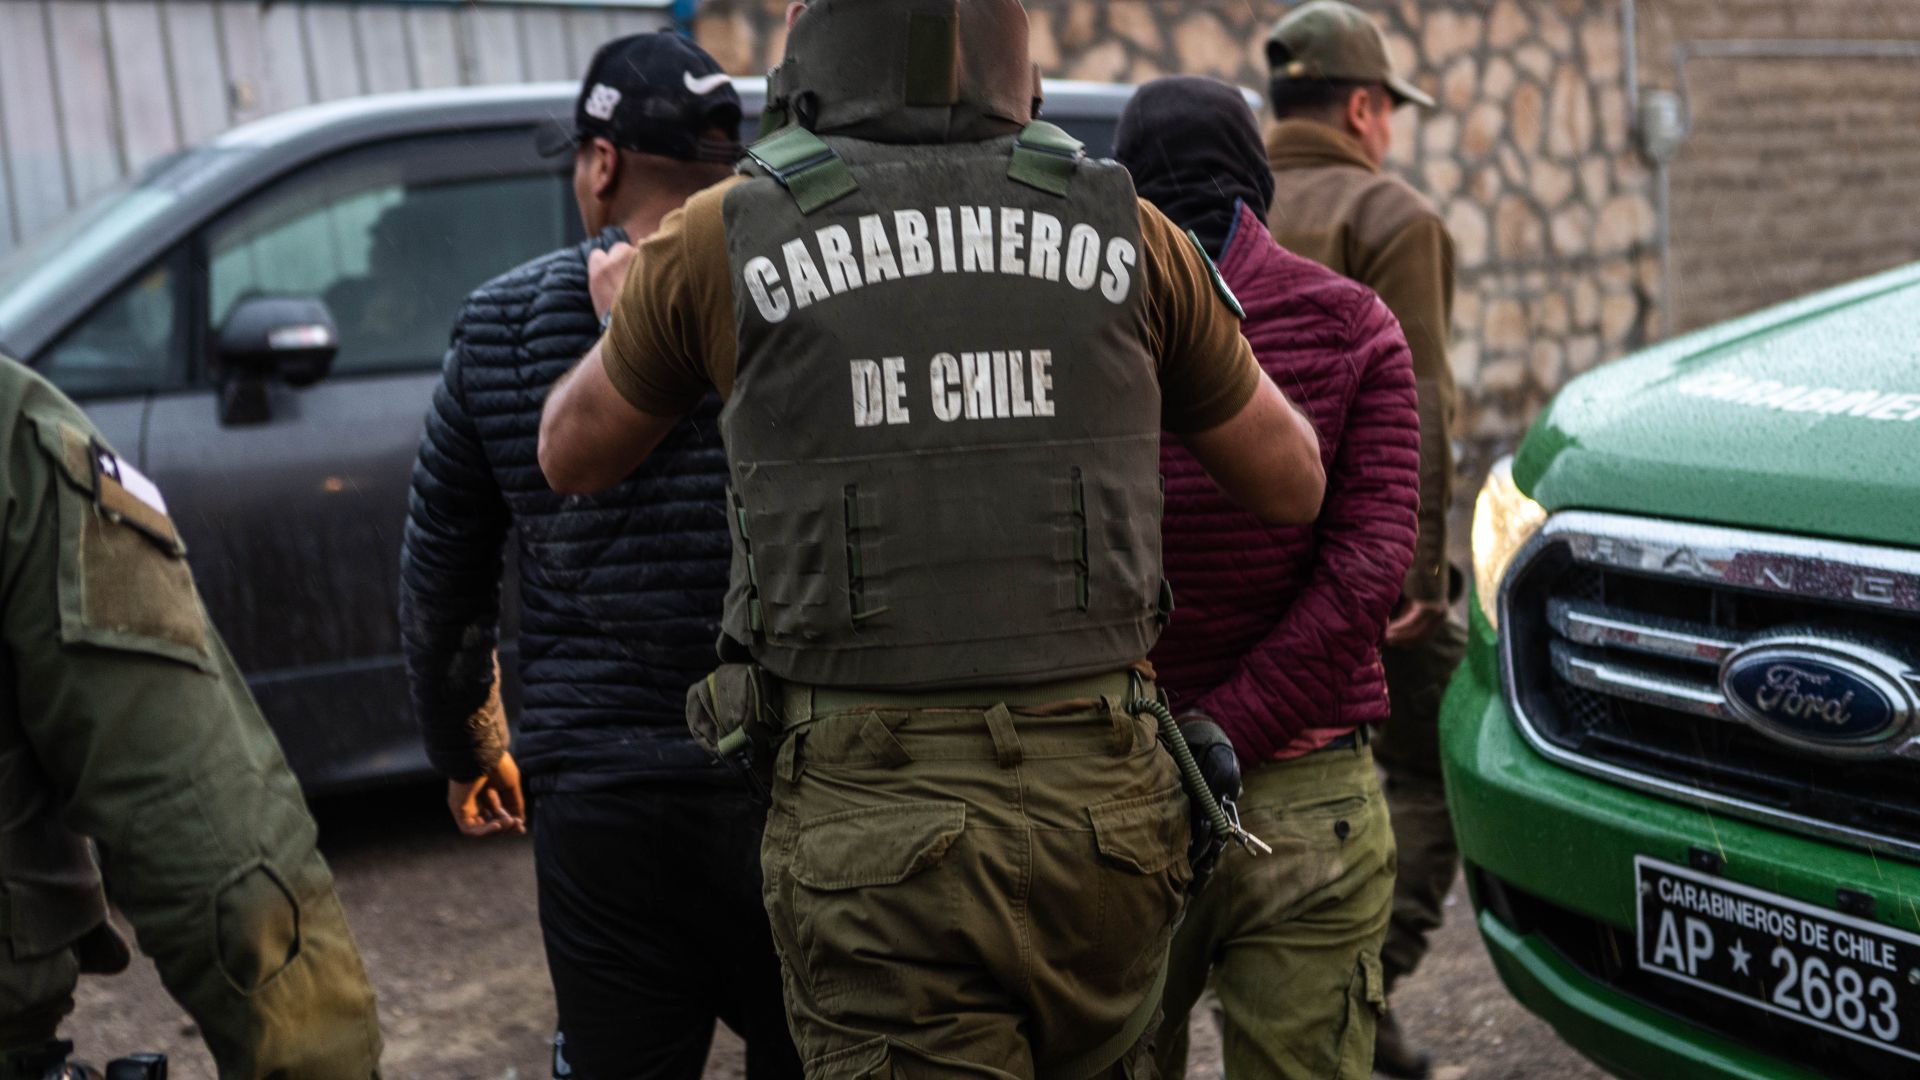 Law enforcement — wearing flak vests labelled "Carabineros de Chile" — make arrests along the border.